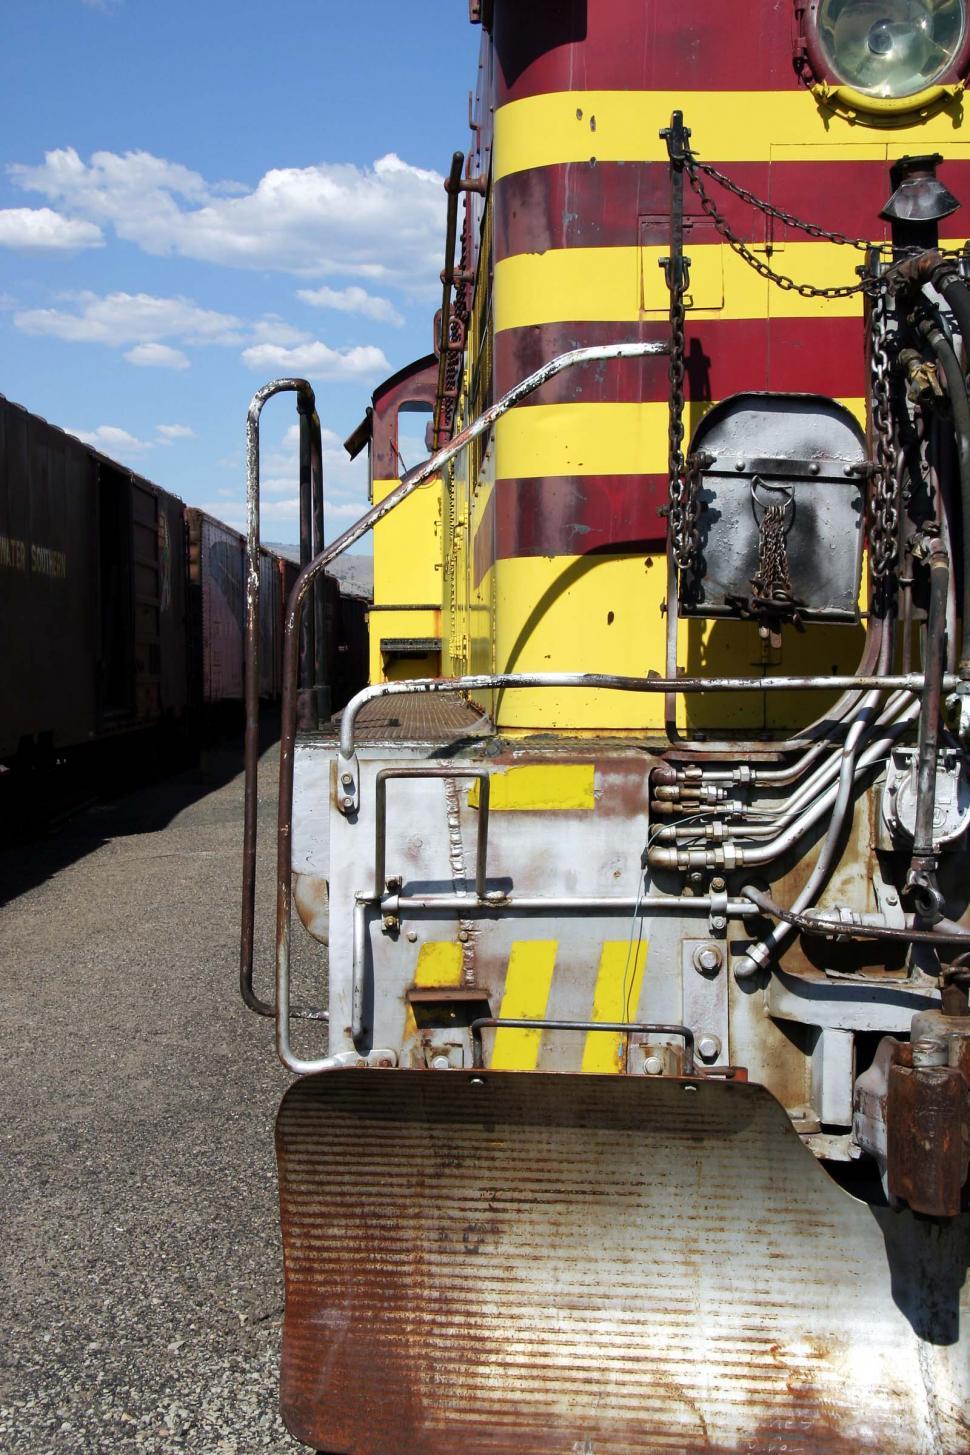 Free Image of train california rust decay metal scrape locomotive engine cab blade hose fitting hydraulic railing 